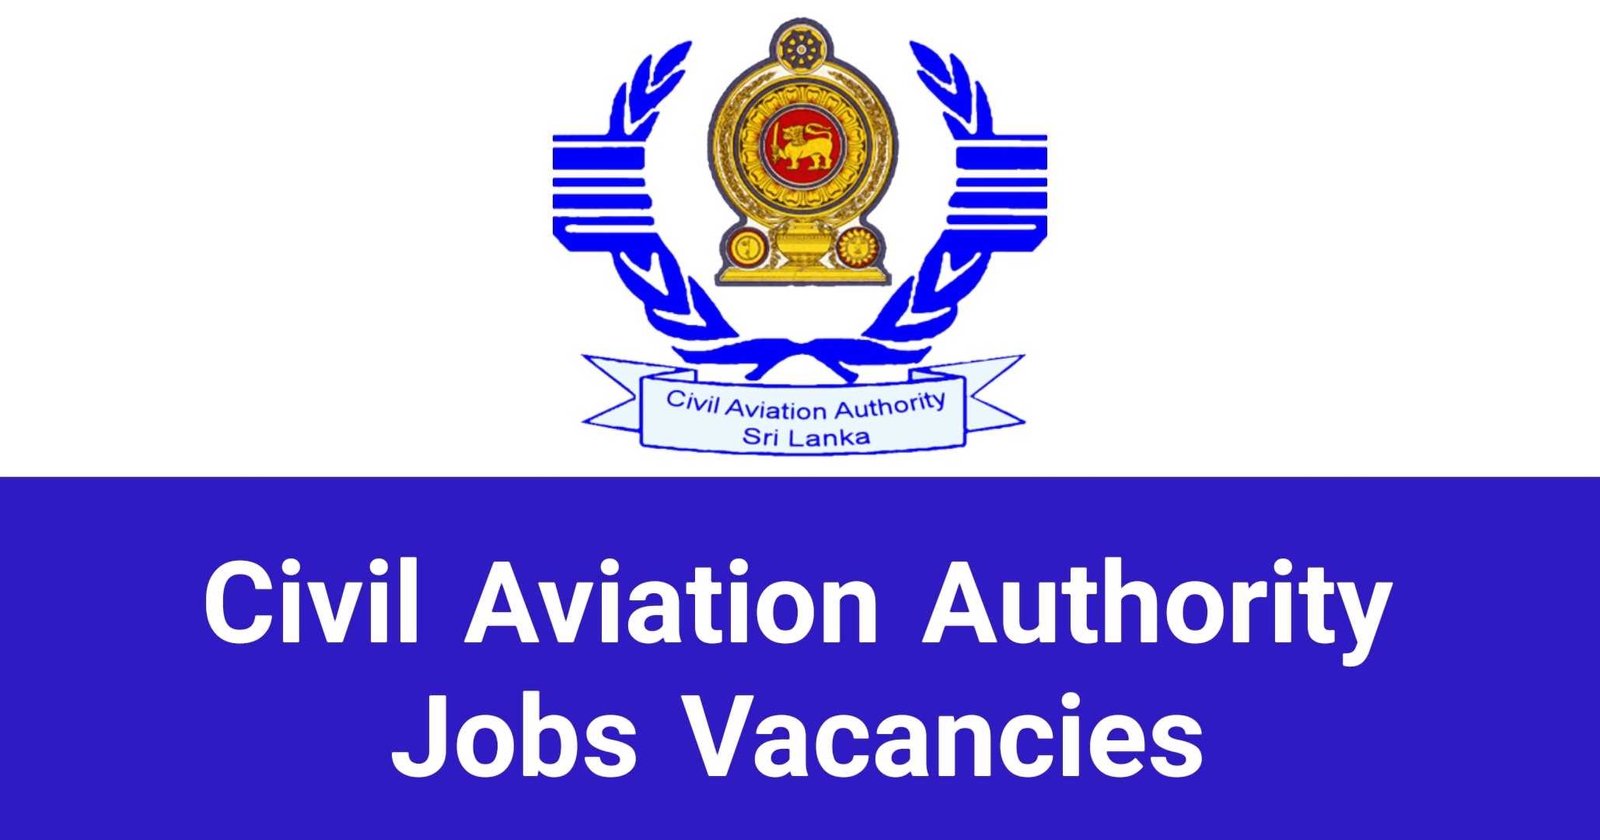 Civil Aviation Authority Jobs Vacancies Careers